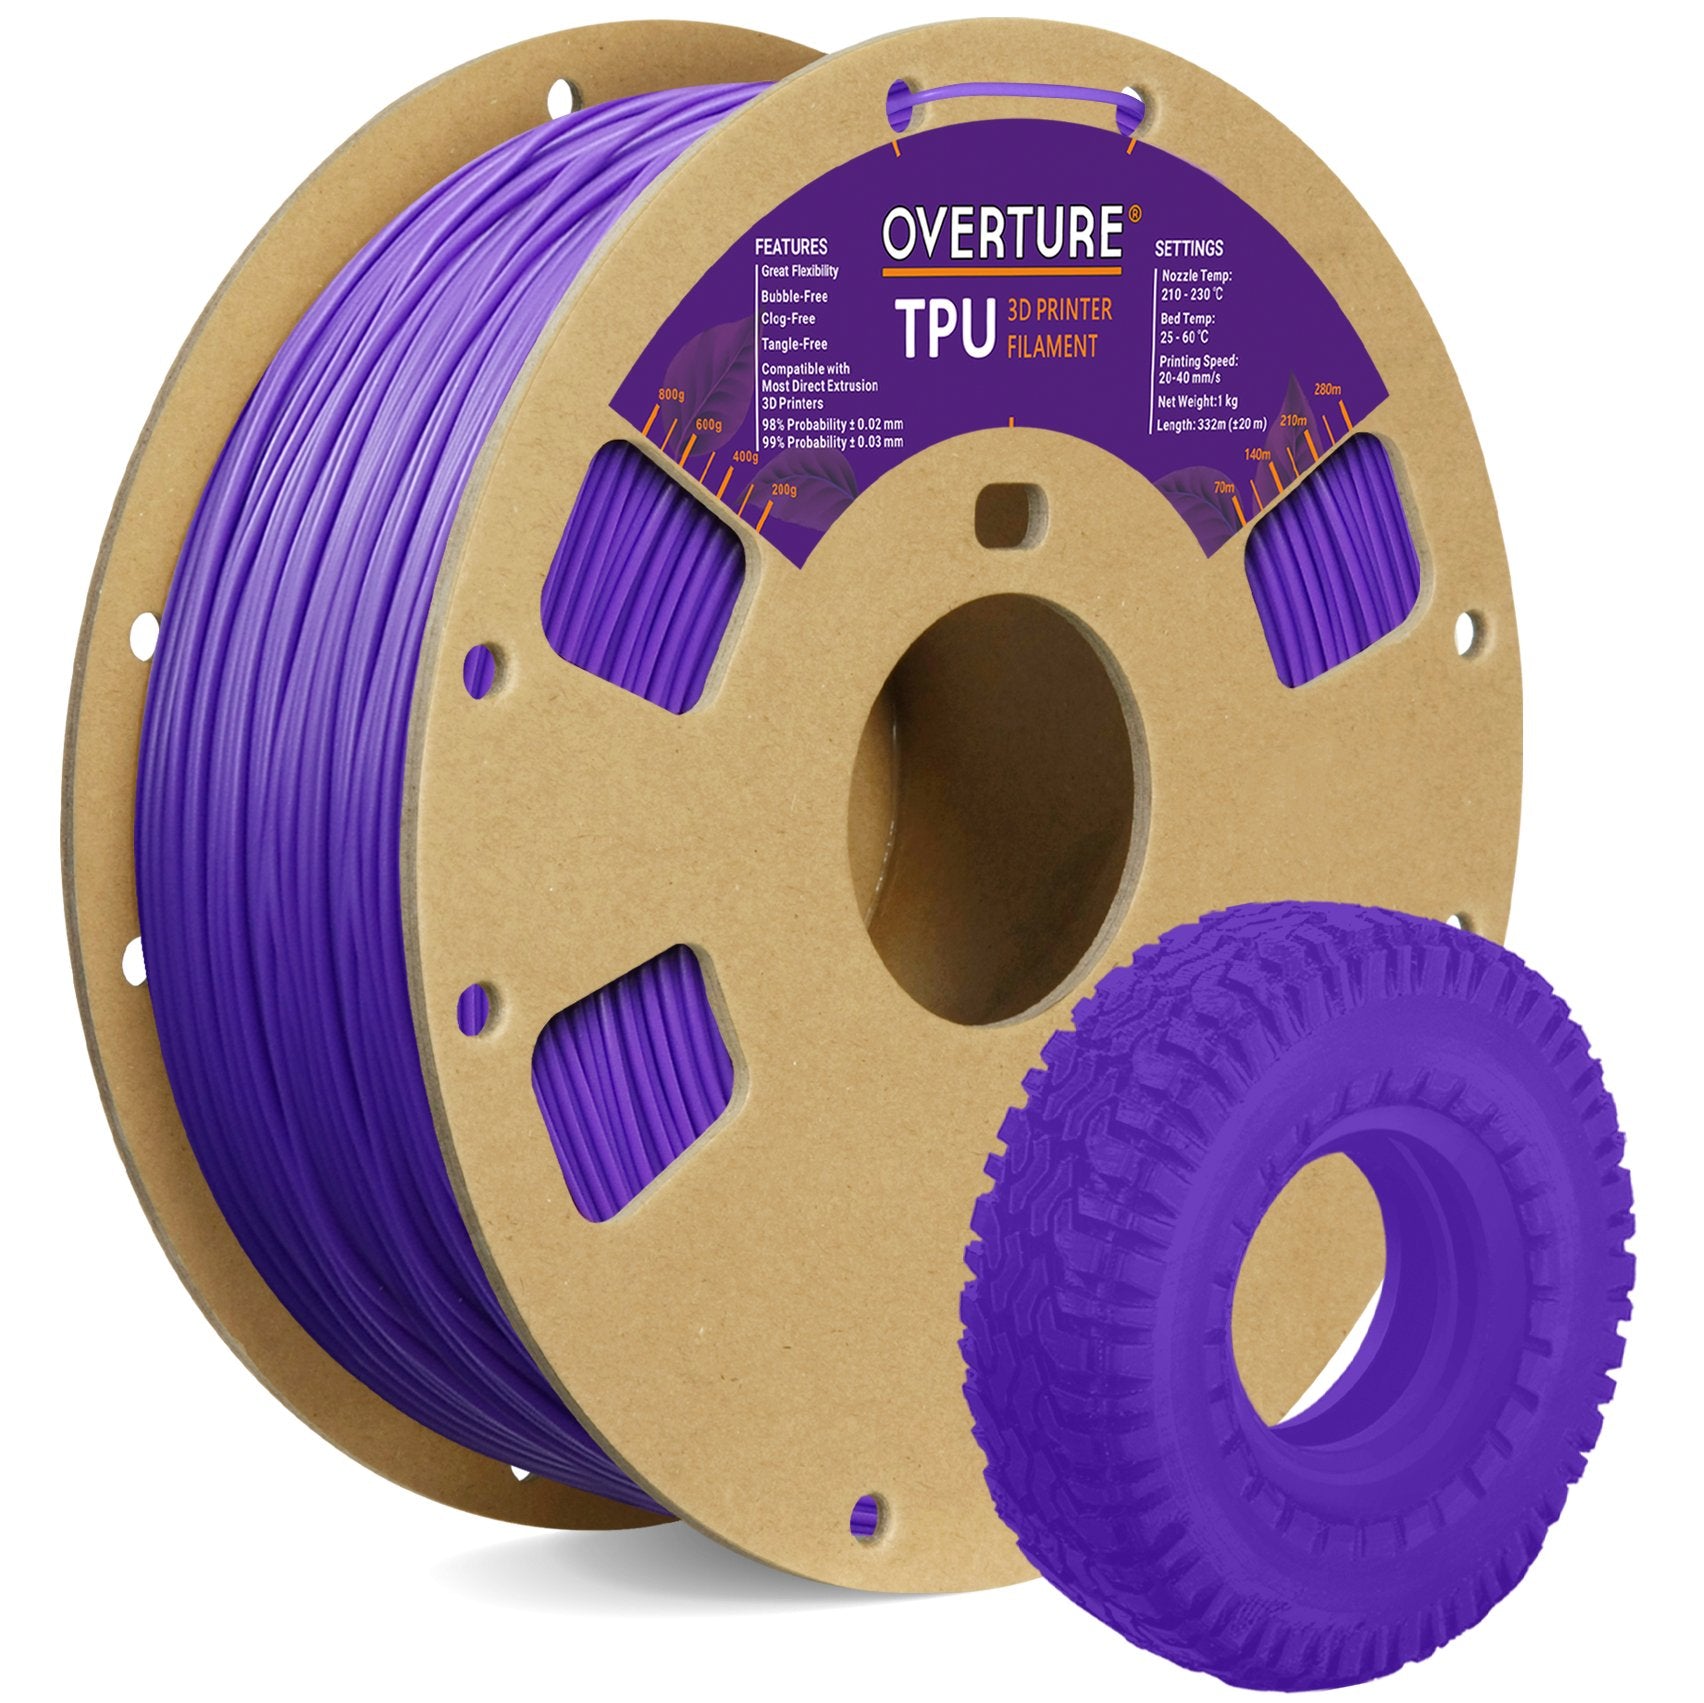 Overture TPU Filament 1.75mm Flexible TPU Roll Soft 3D Printer Consumables, 1kg Spool (2.2 lbs), Dimensional Accuracy +/- 0.03 mm, 1 Pack (Black)